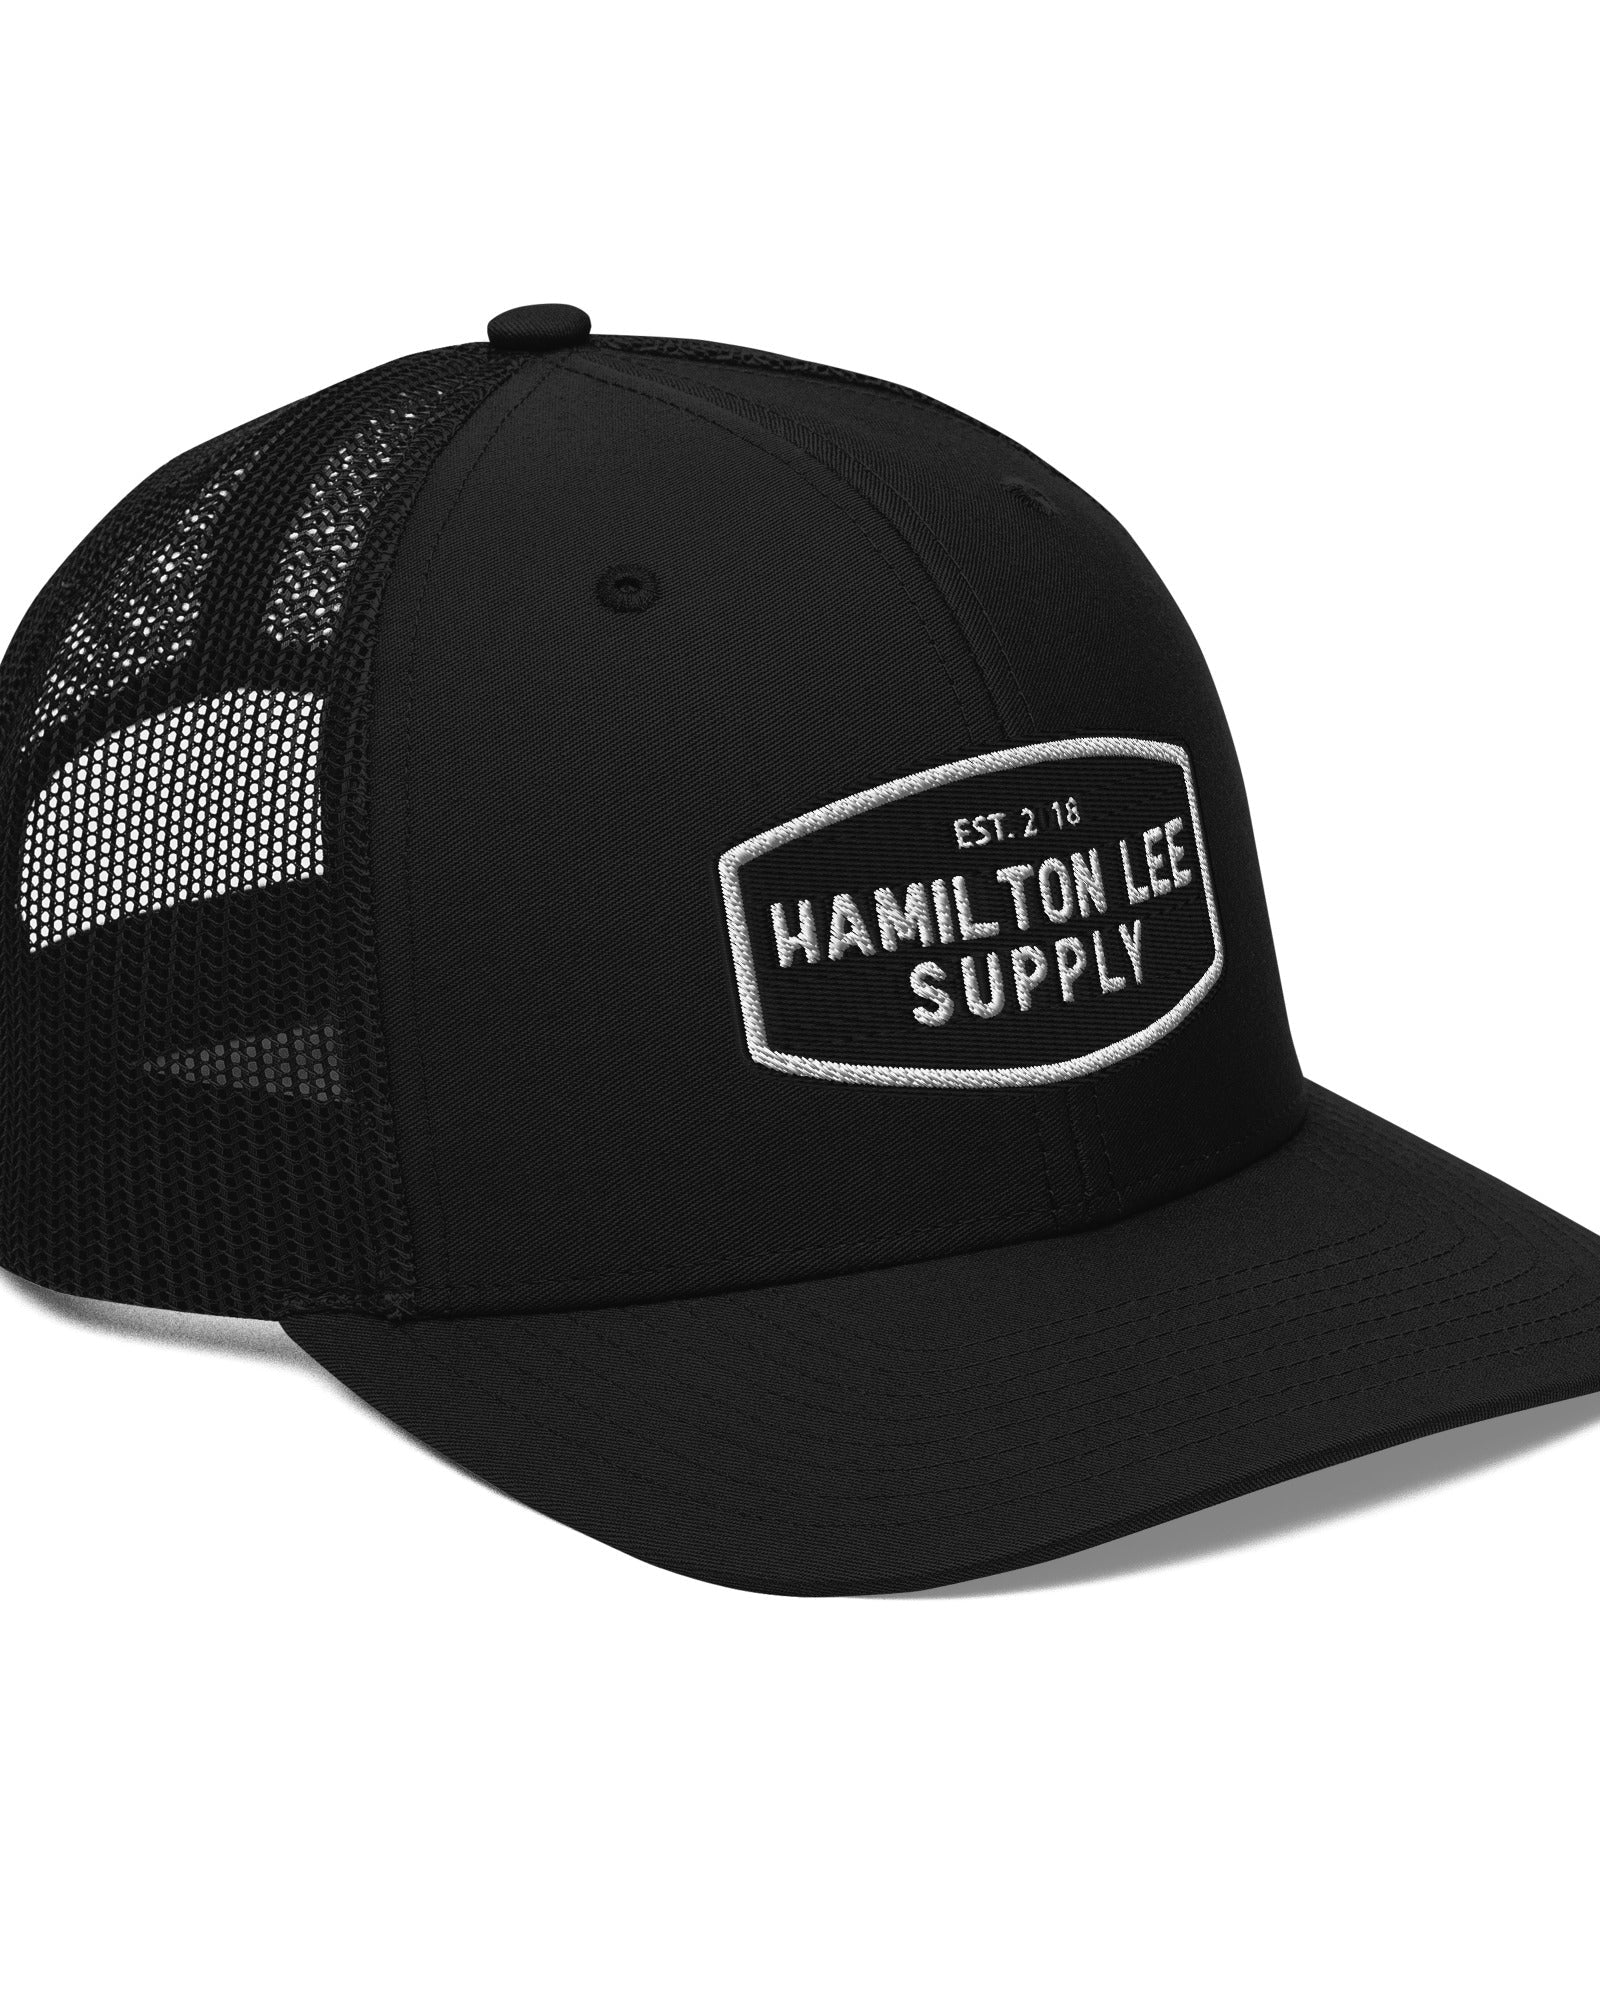 Hamilton Lee Supply | Trucker Cap | Trucker Hat | Hamilton Lee Supply